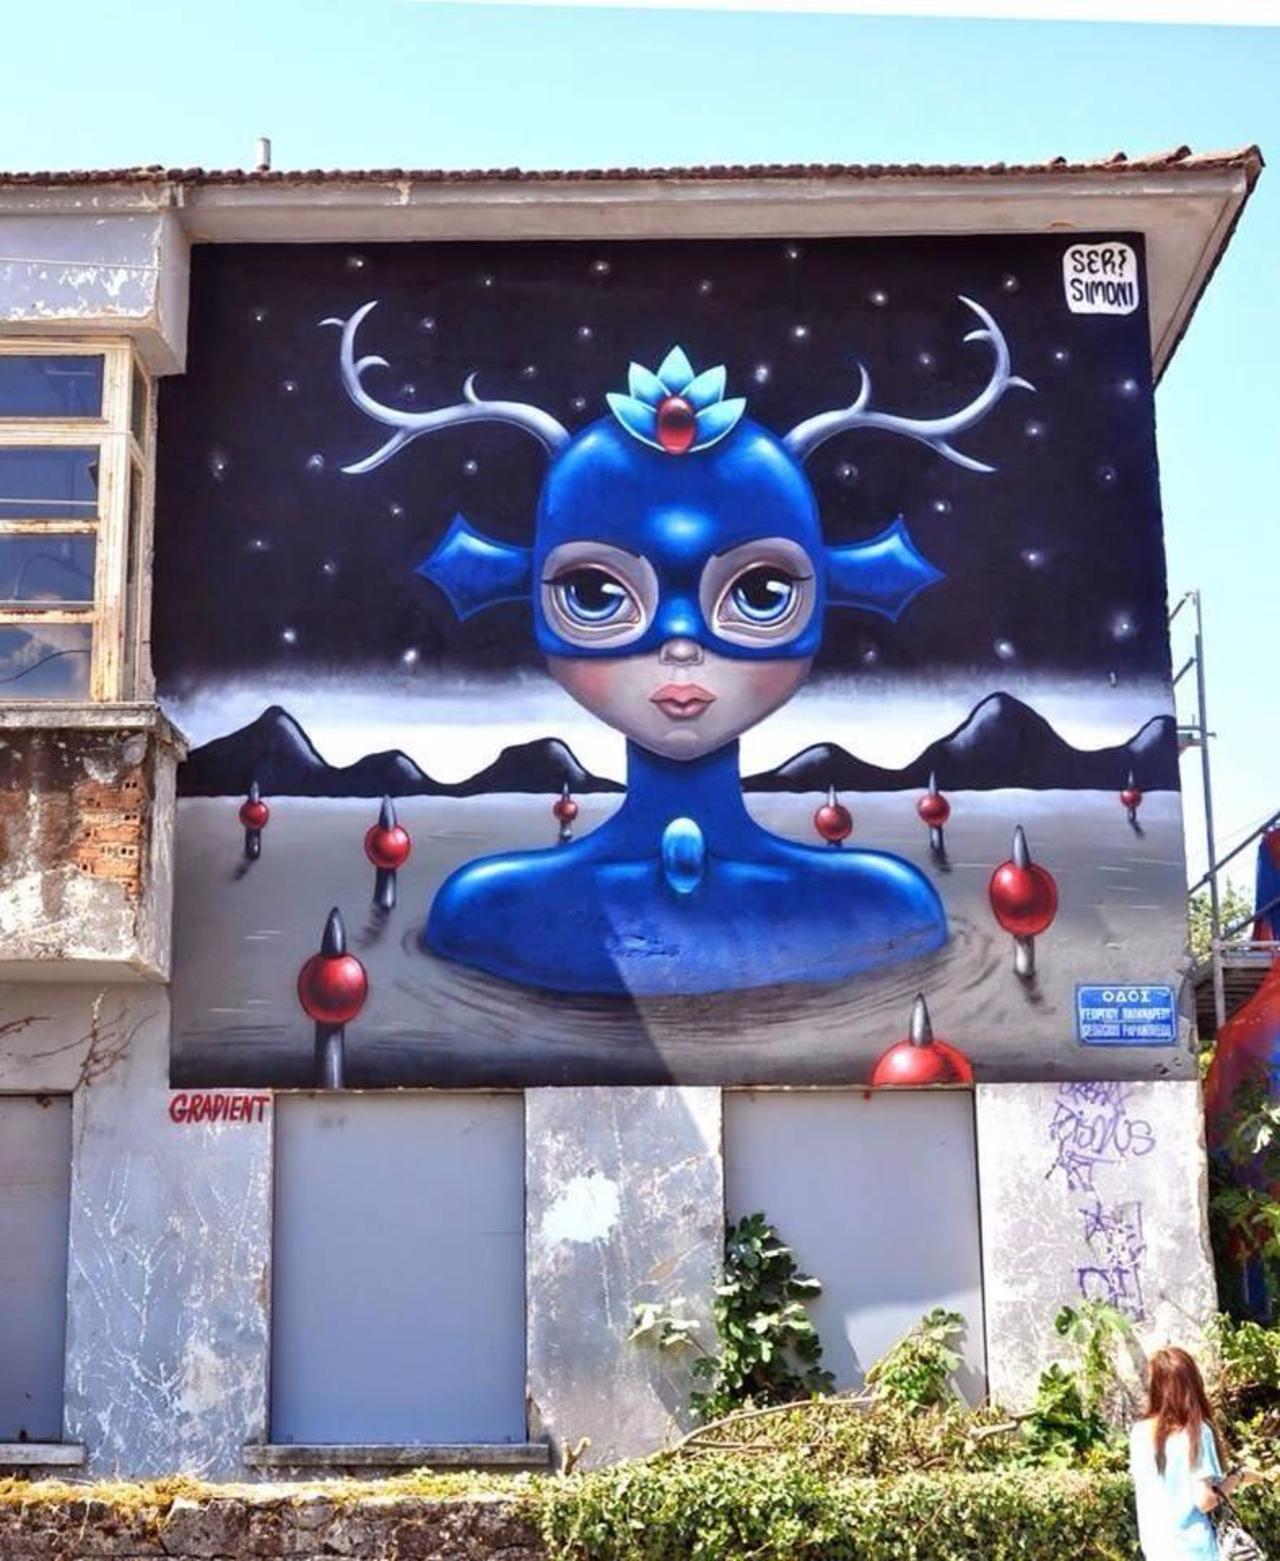 Simoni Fontana & Argiris Ser new unique Street Art mural in Loannina, Greece #art #mural #graffiti #streetart https://t.co/7o56KAHmiT